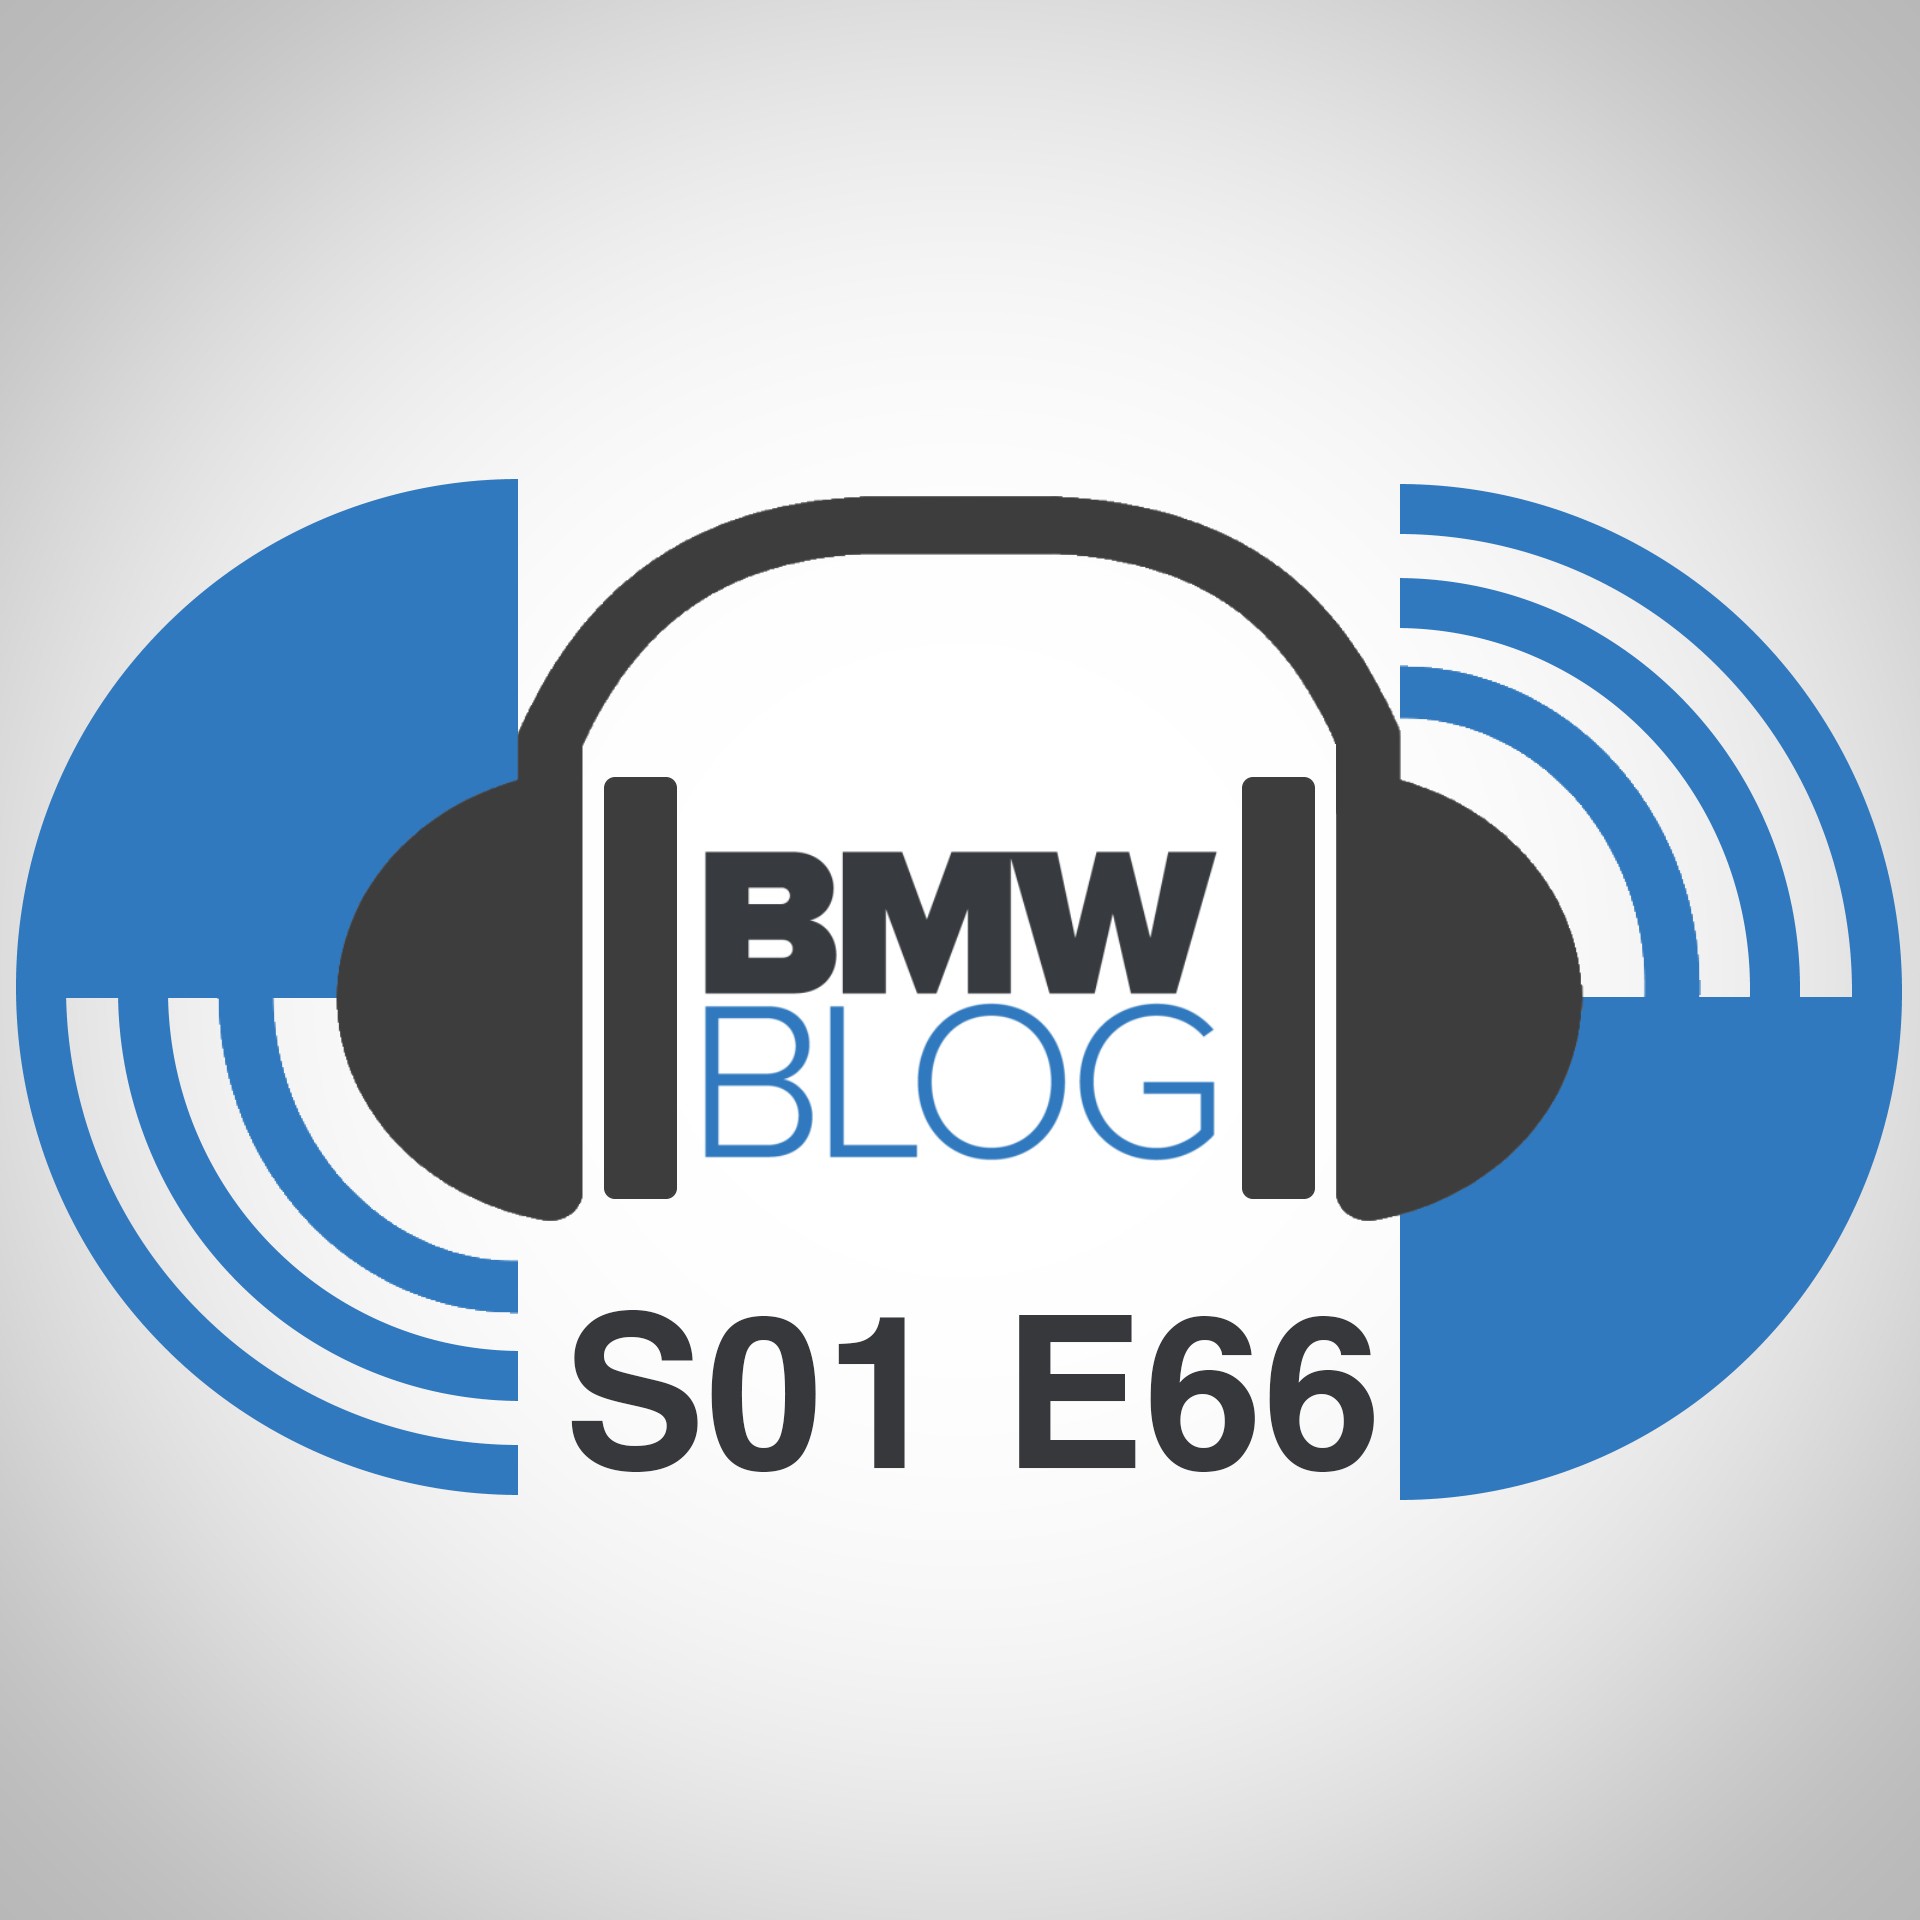 bmwblog podcast 66